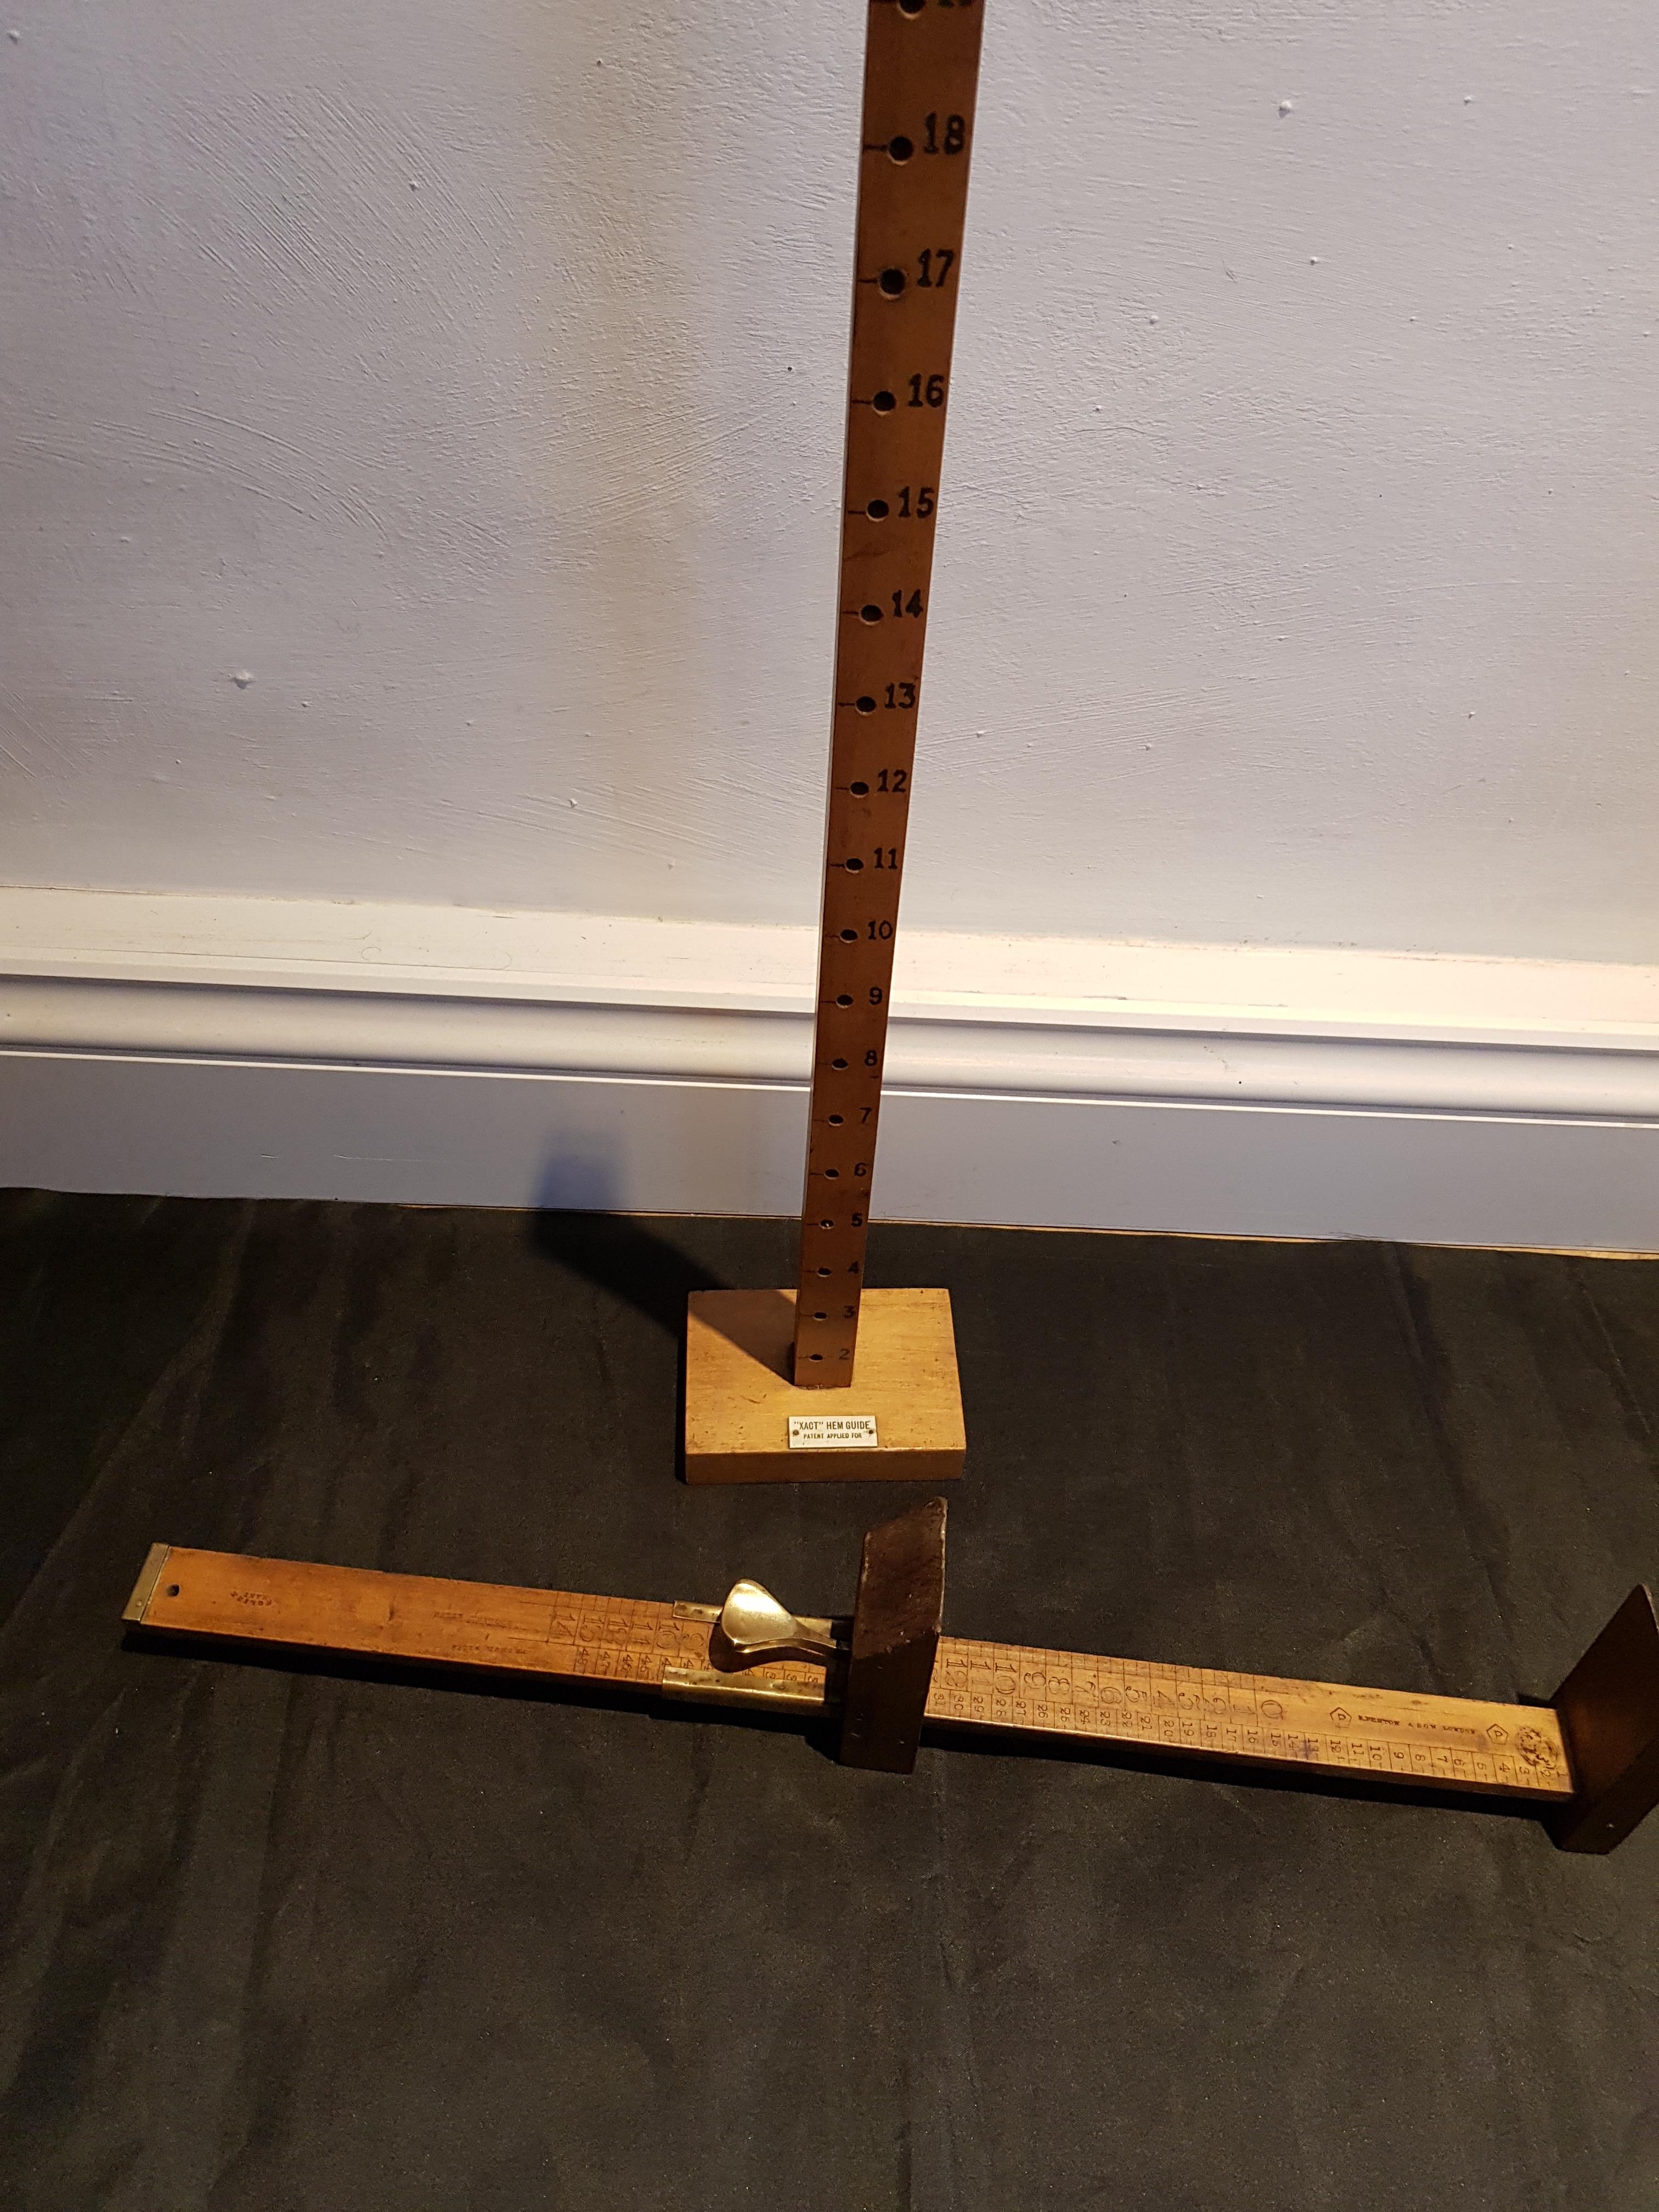 Early 1900's Foot measure and Hem Measure.